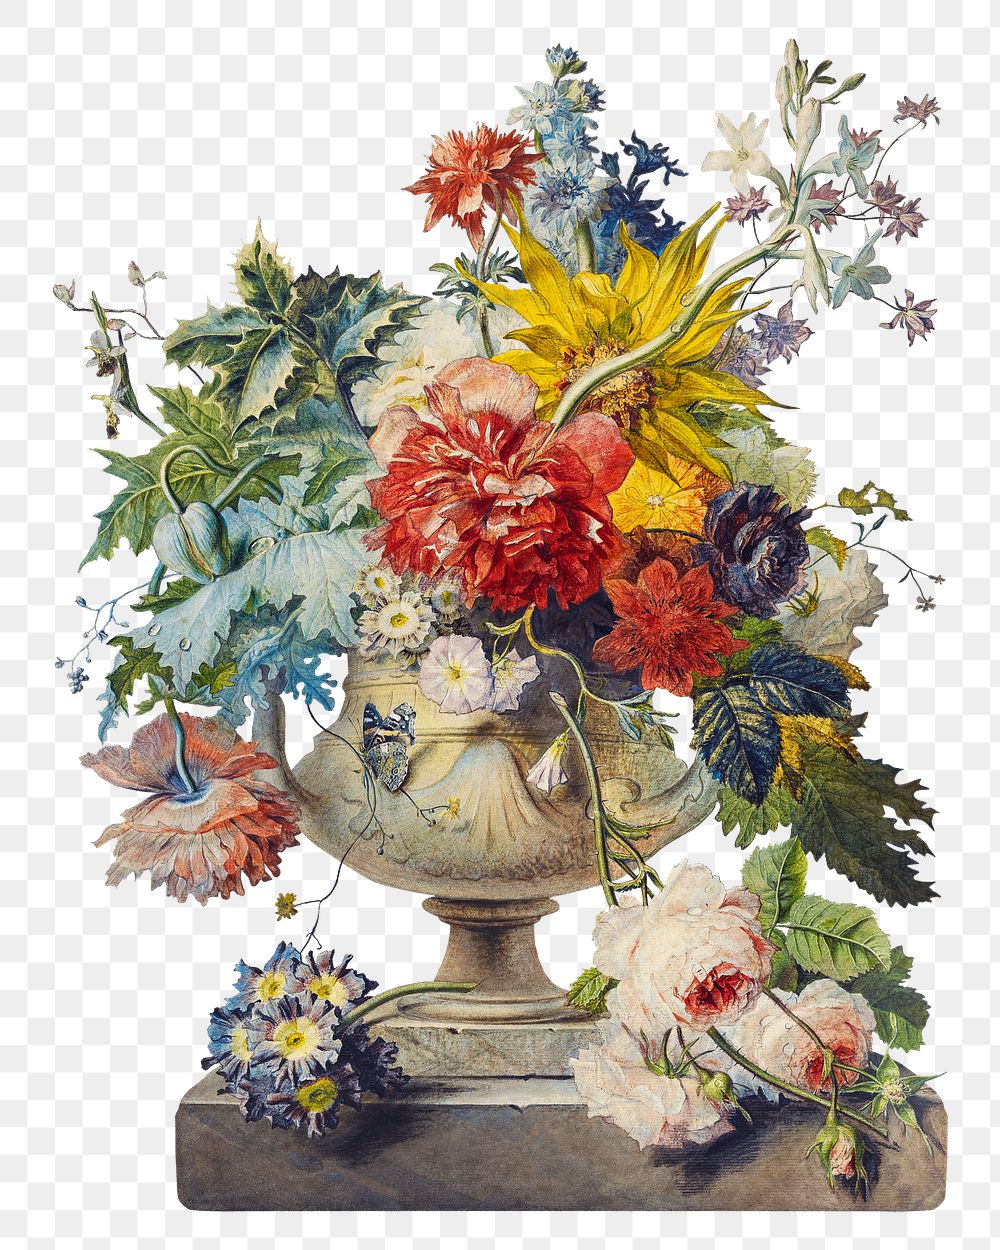 Png Johannes van Os sticker, bouquet of flowers vintage illustration, transparent background